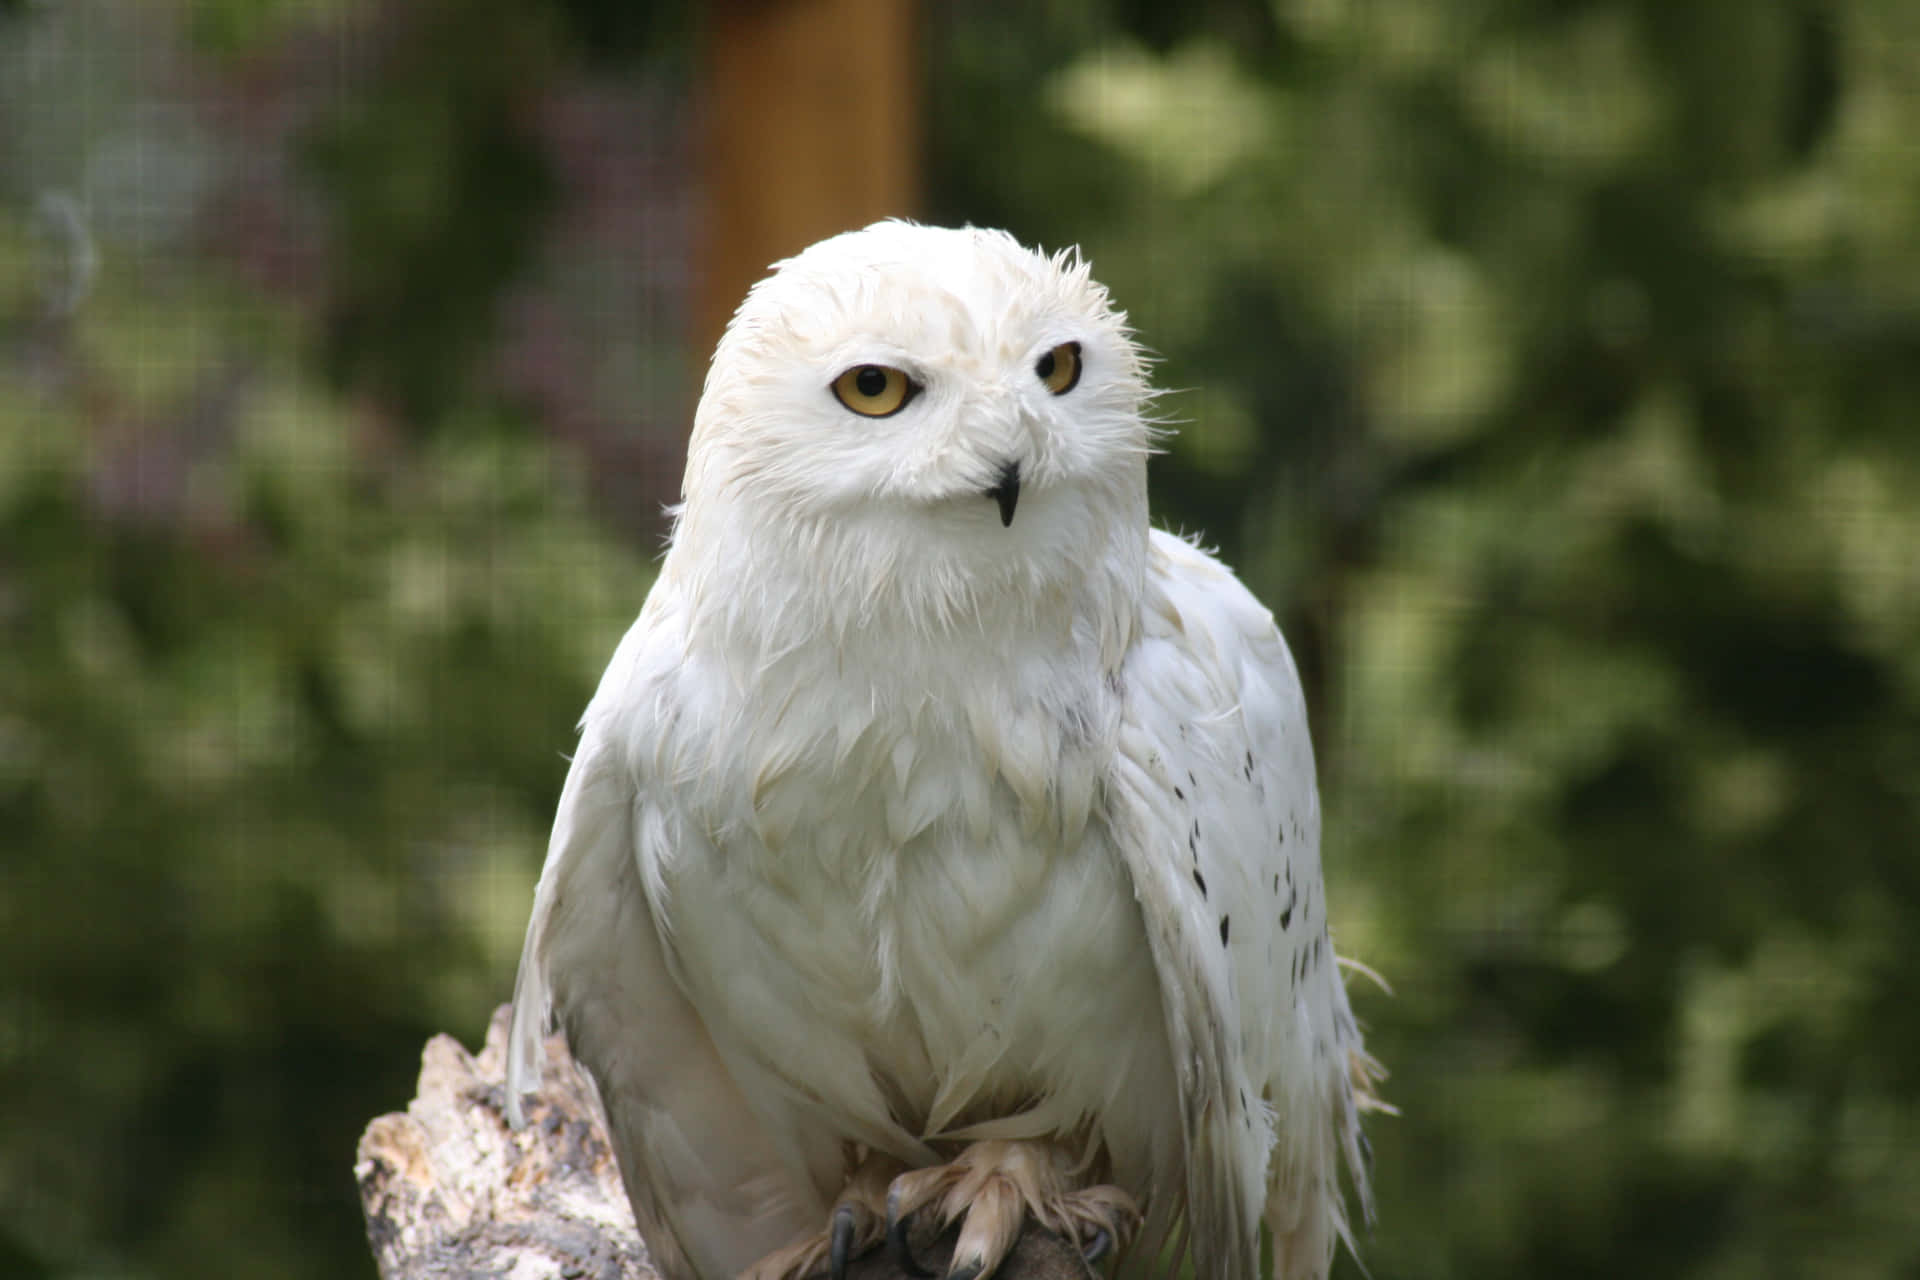 The Snowy Owl Mystique